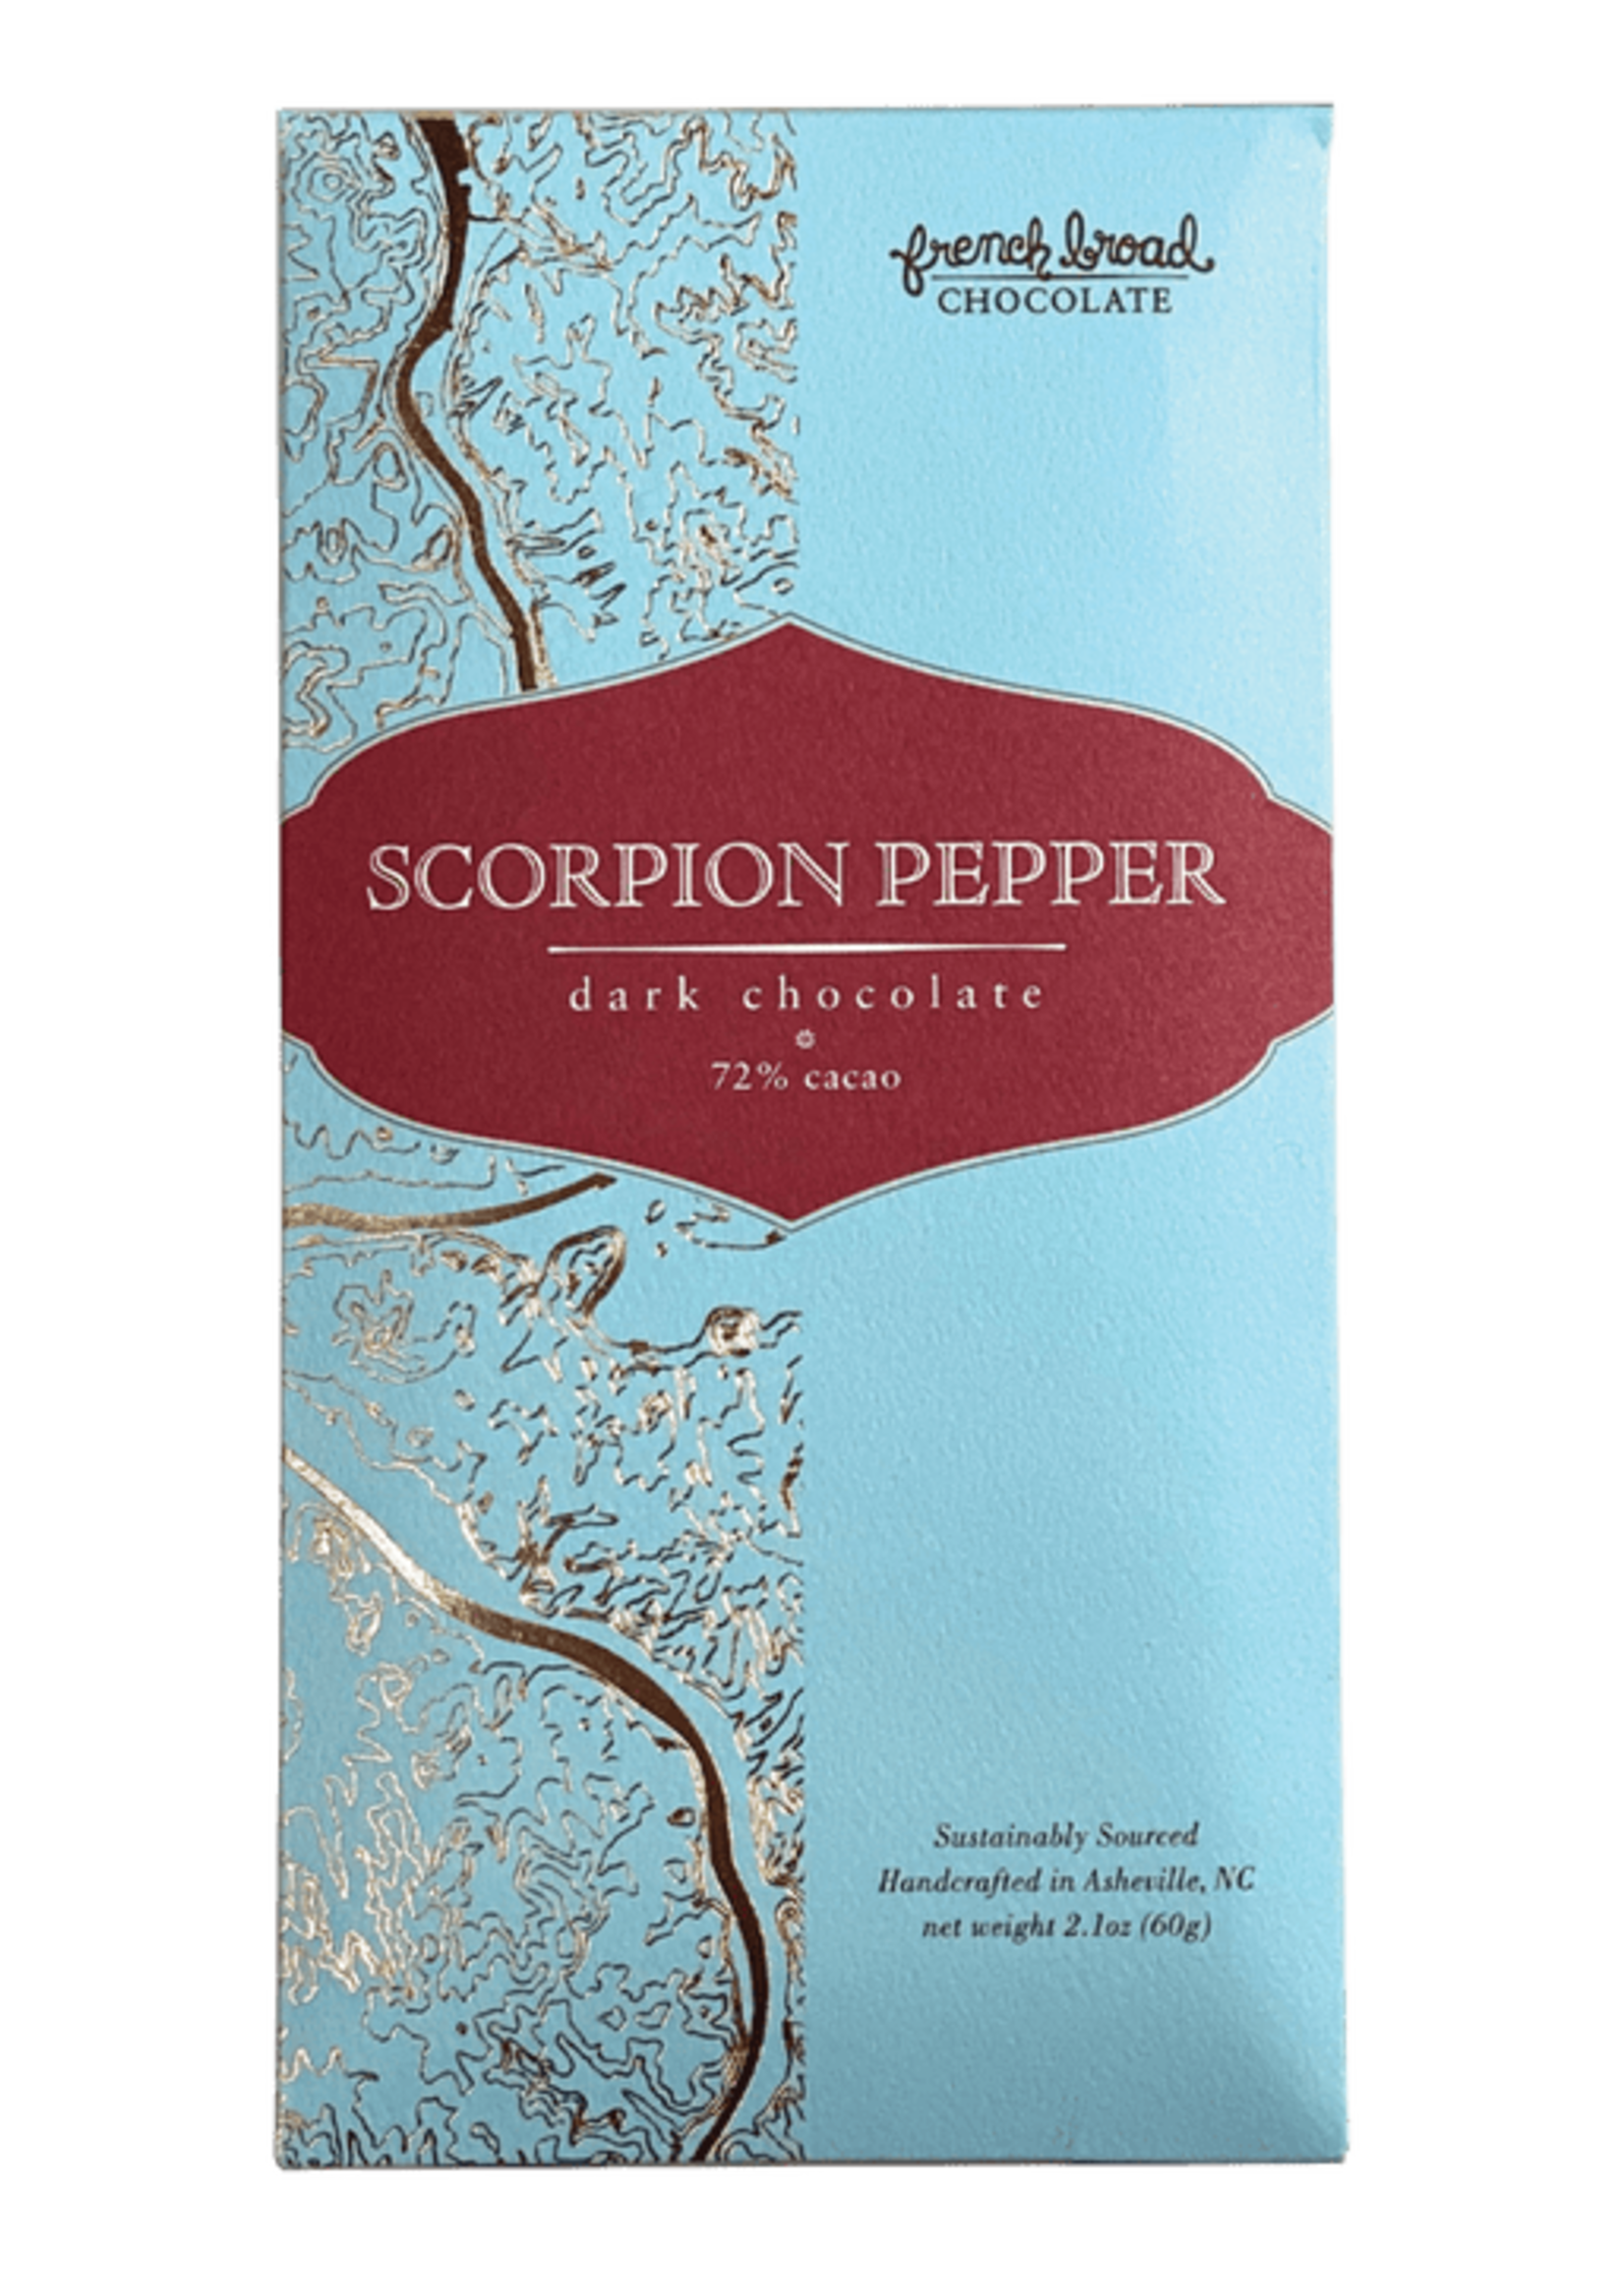 French Broad Chocolates 28g Scorpion Pepper Dark Chocolate Bar